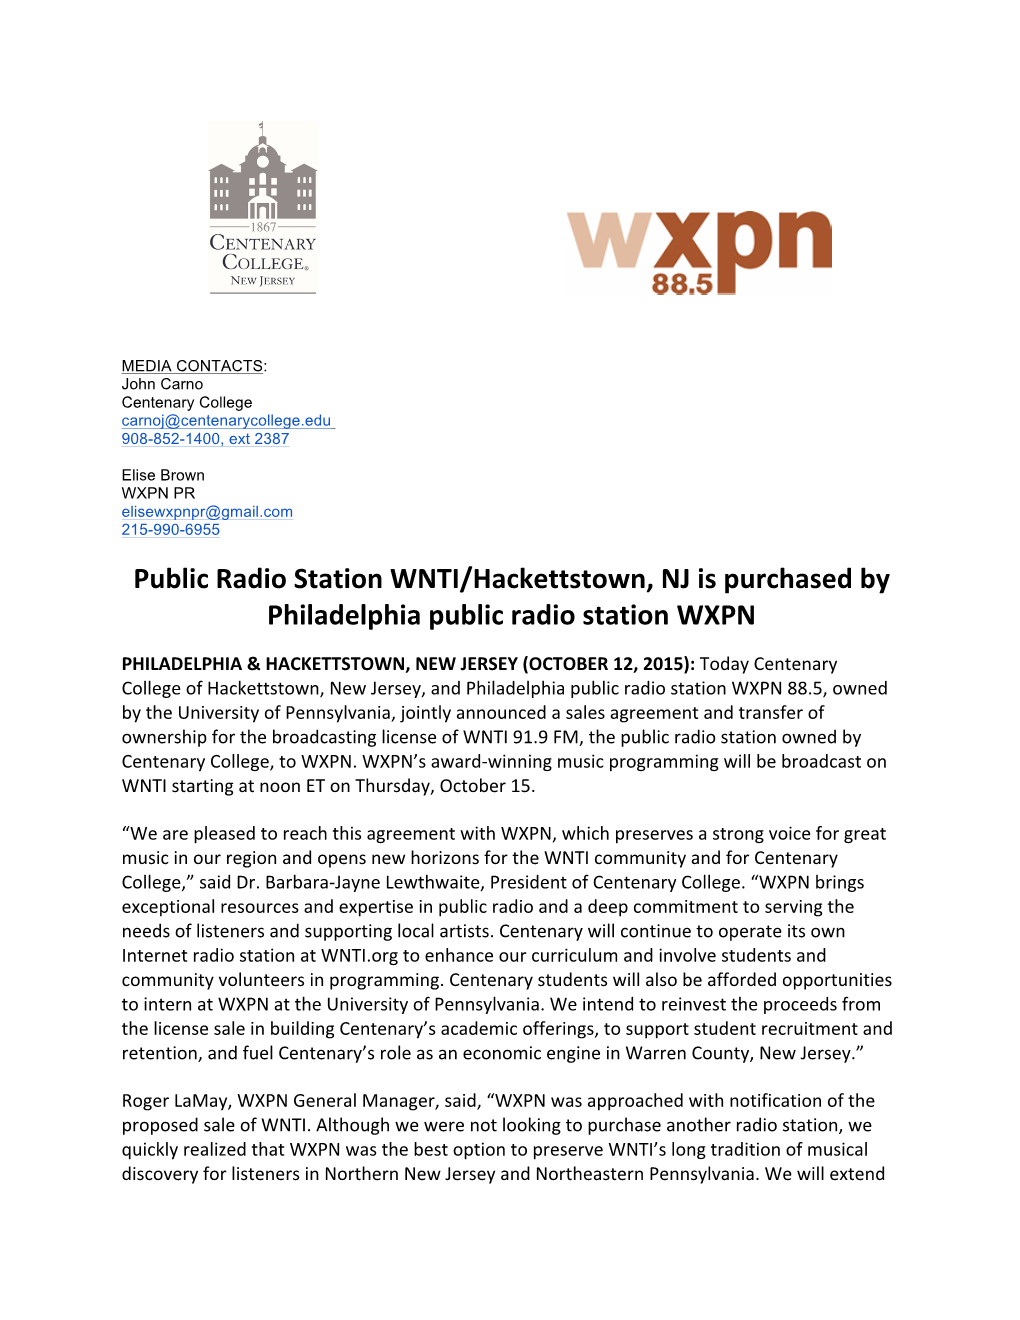 Public Radio Station WNTI/Hackettstown, NJ Is Purchased by Philadelphia Public Radio Station WXPN